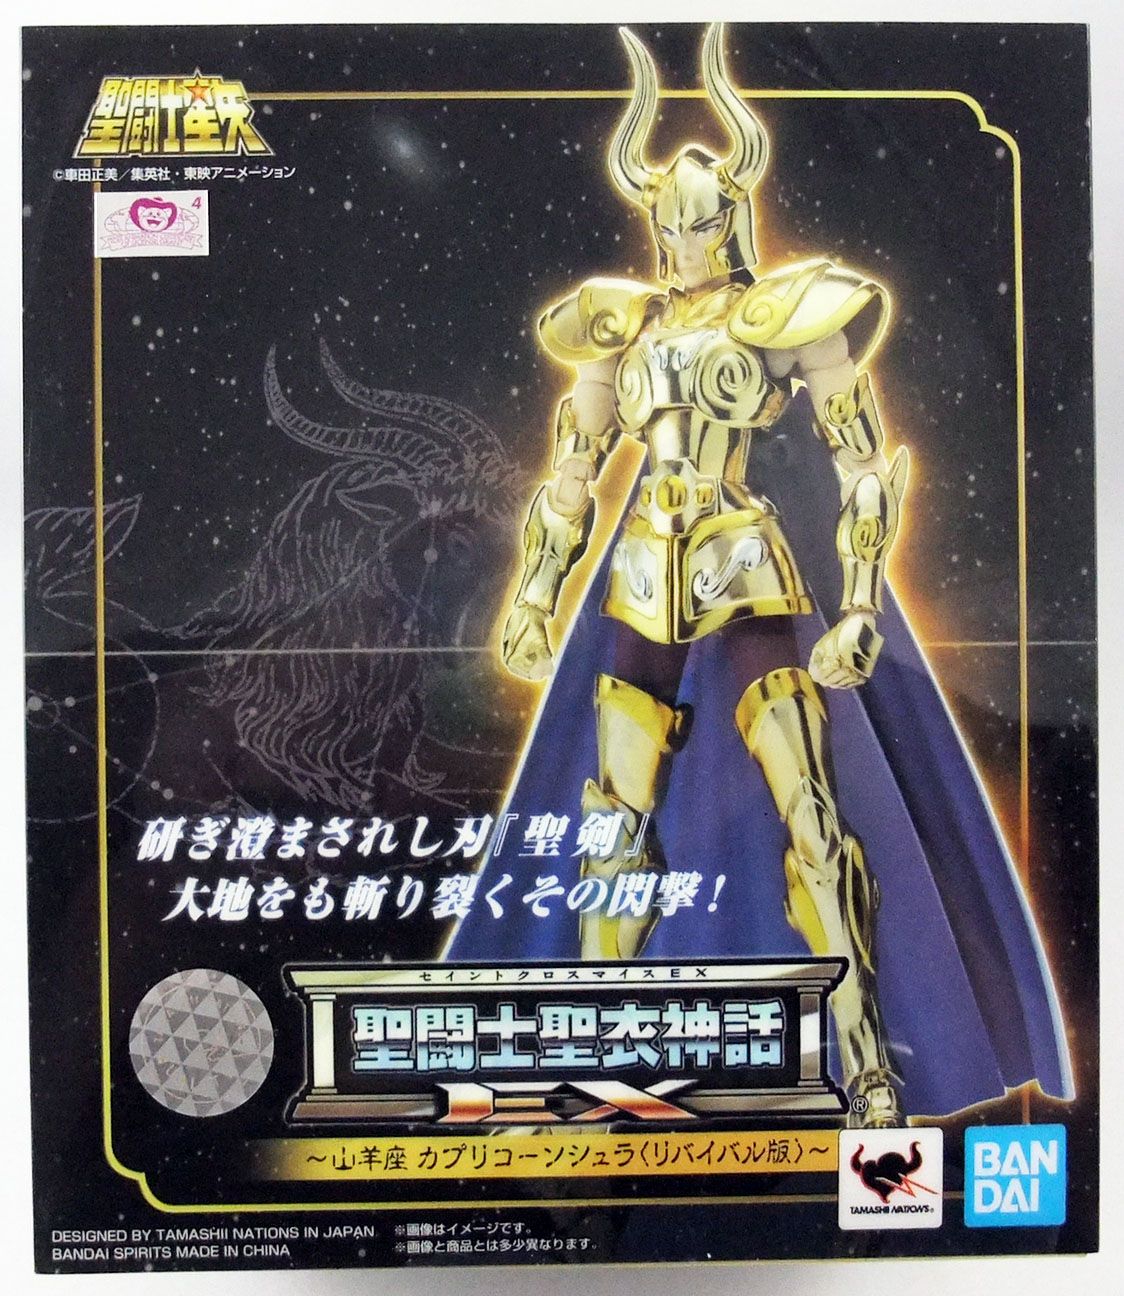  Bandai - Figurine Saint Seiya Myth Cloth Ex - Capricorn Shura  Revival 18cm - 4573102612908 : Home & Kitchen